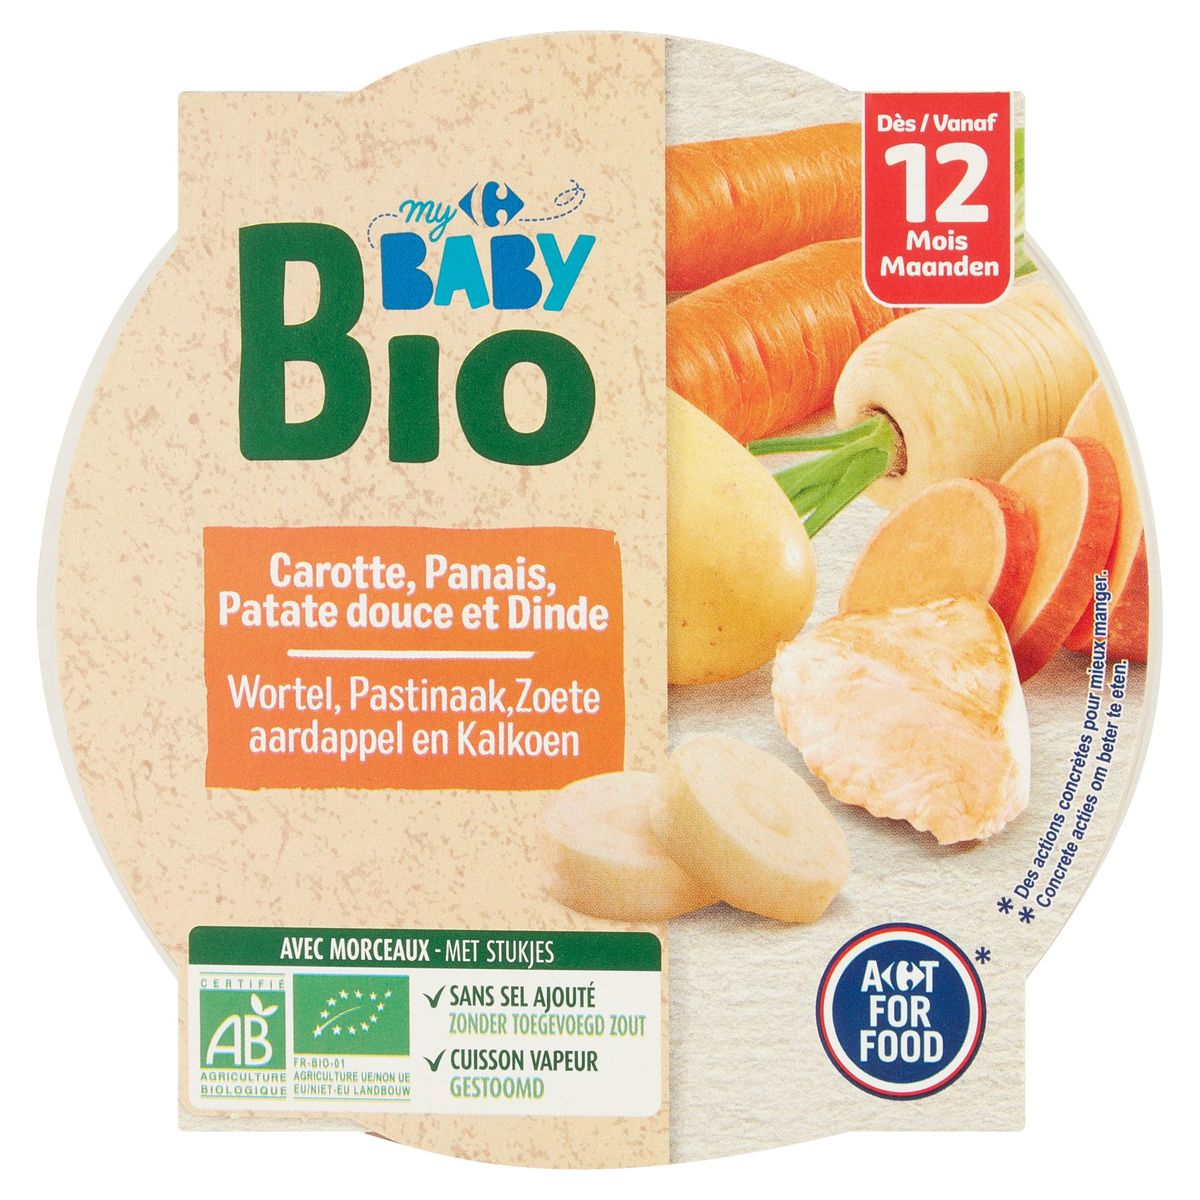 Carrefour Baby Bio Carotte, Panais, Patate Douce et Dinde 12M+ 230 g